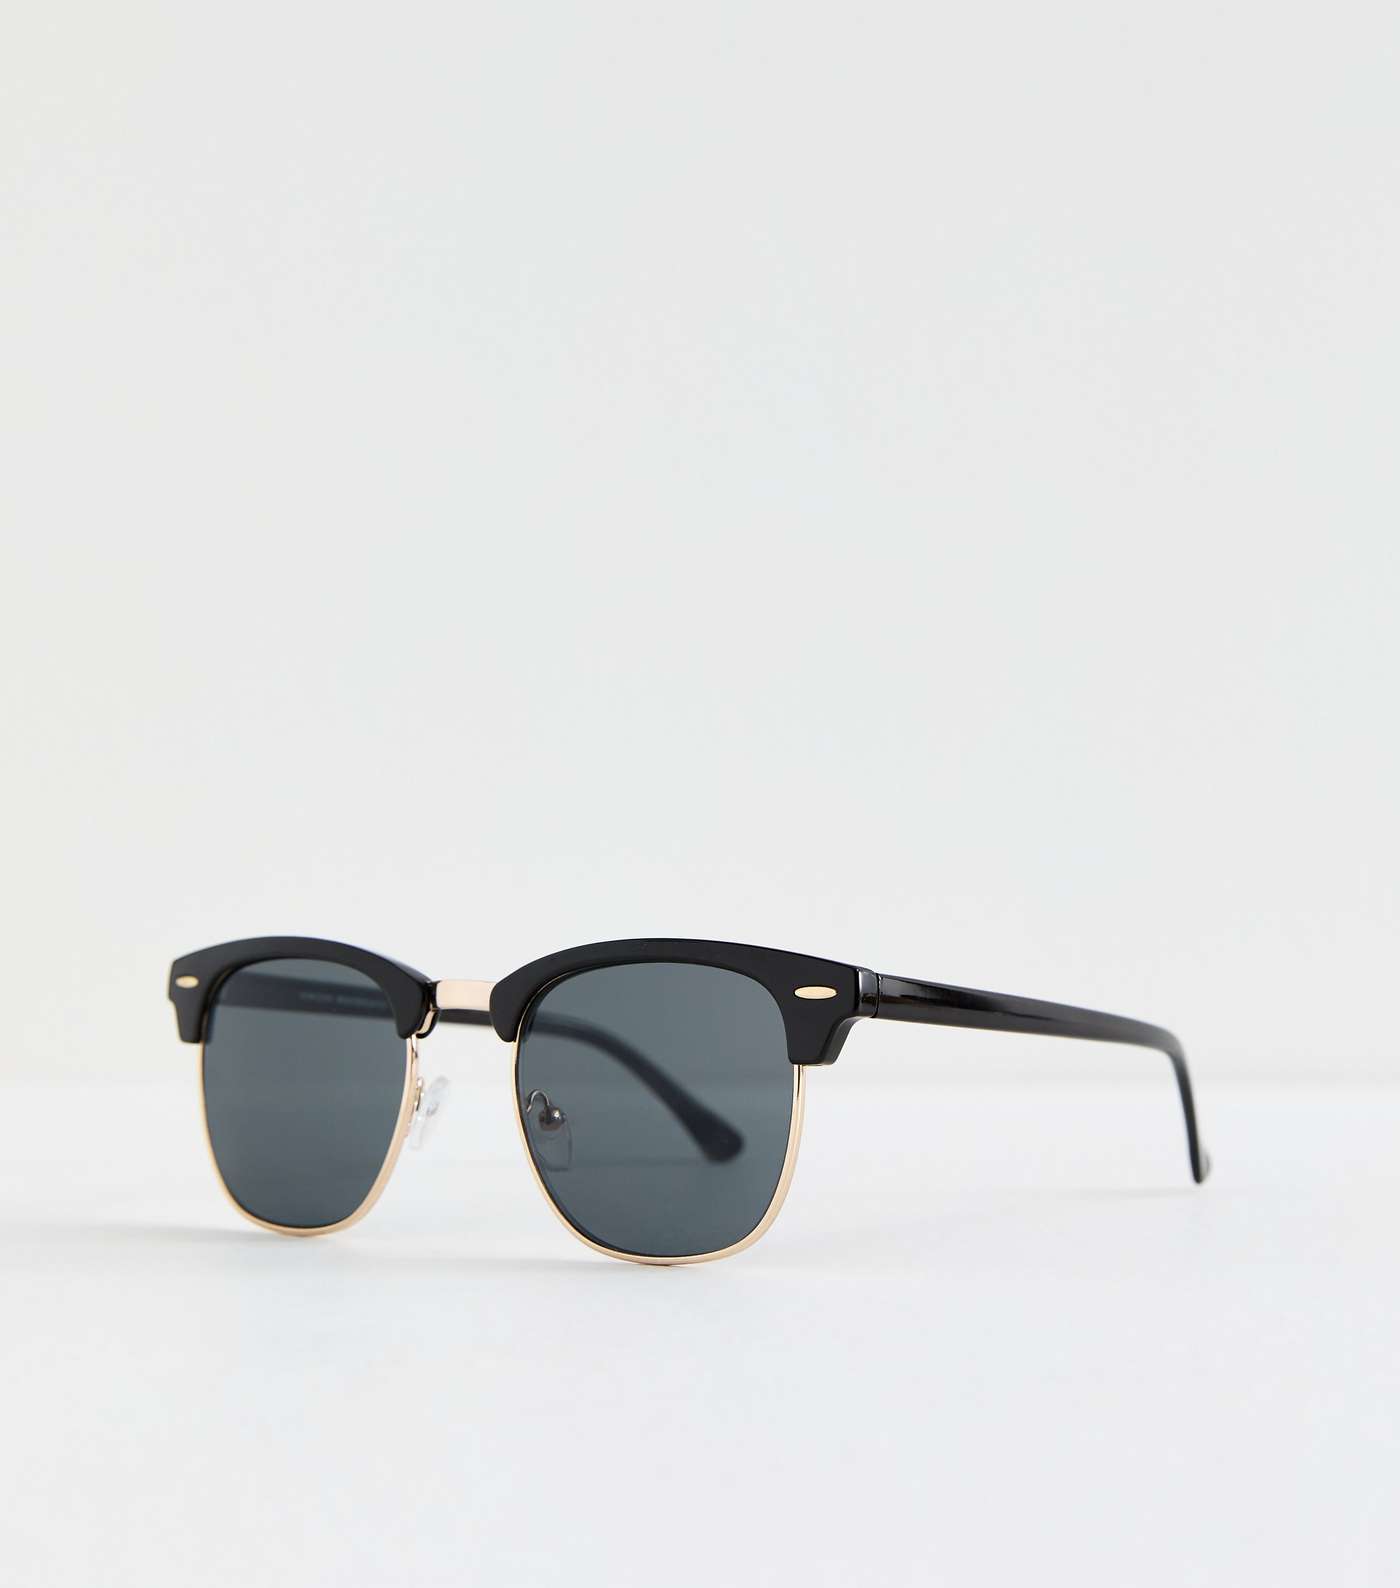 Black Square Frame Sunglasses Image 2